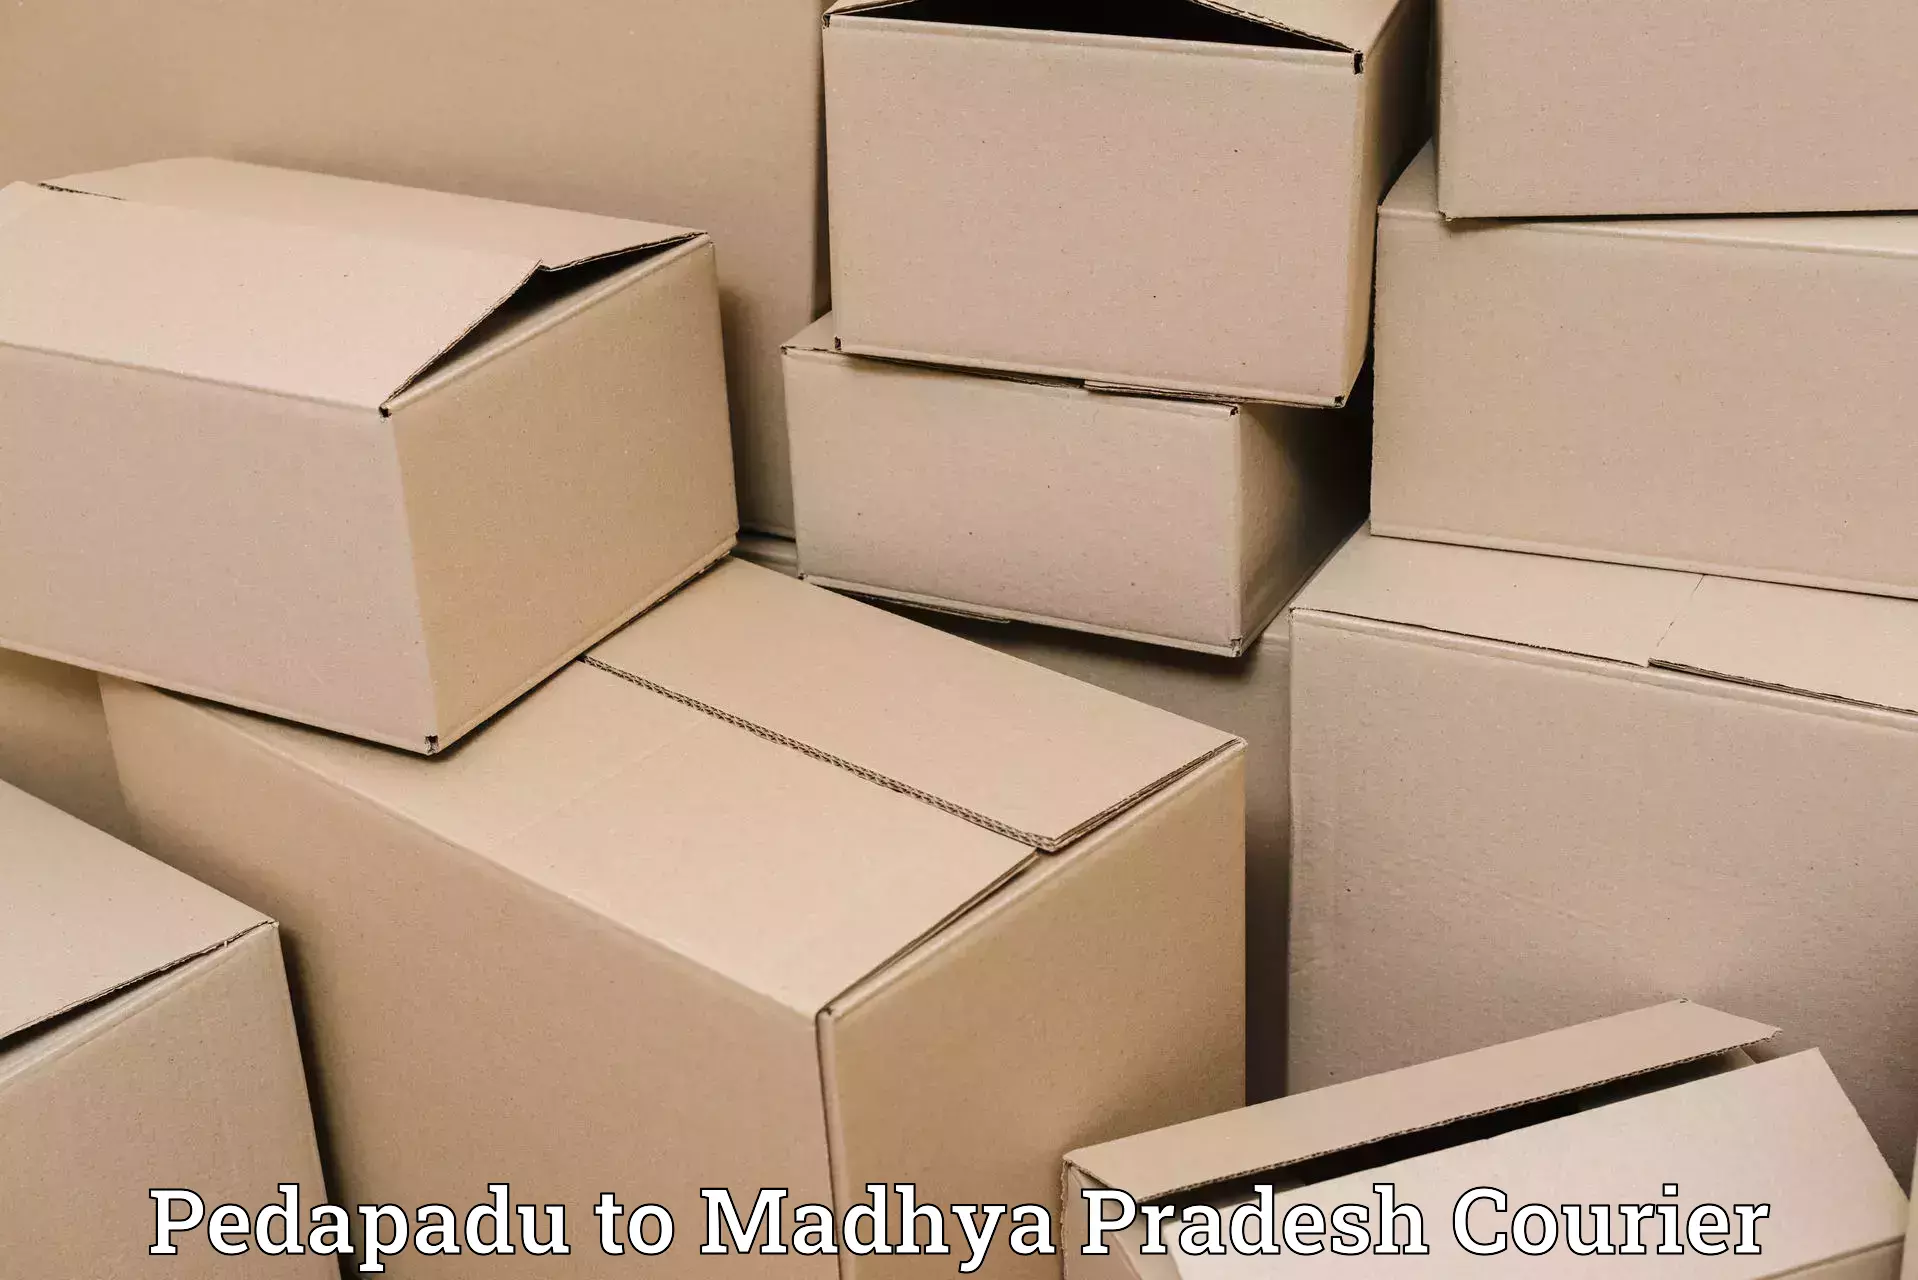 Nationwide delivery network Pedapadu to Dewas